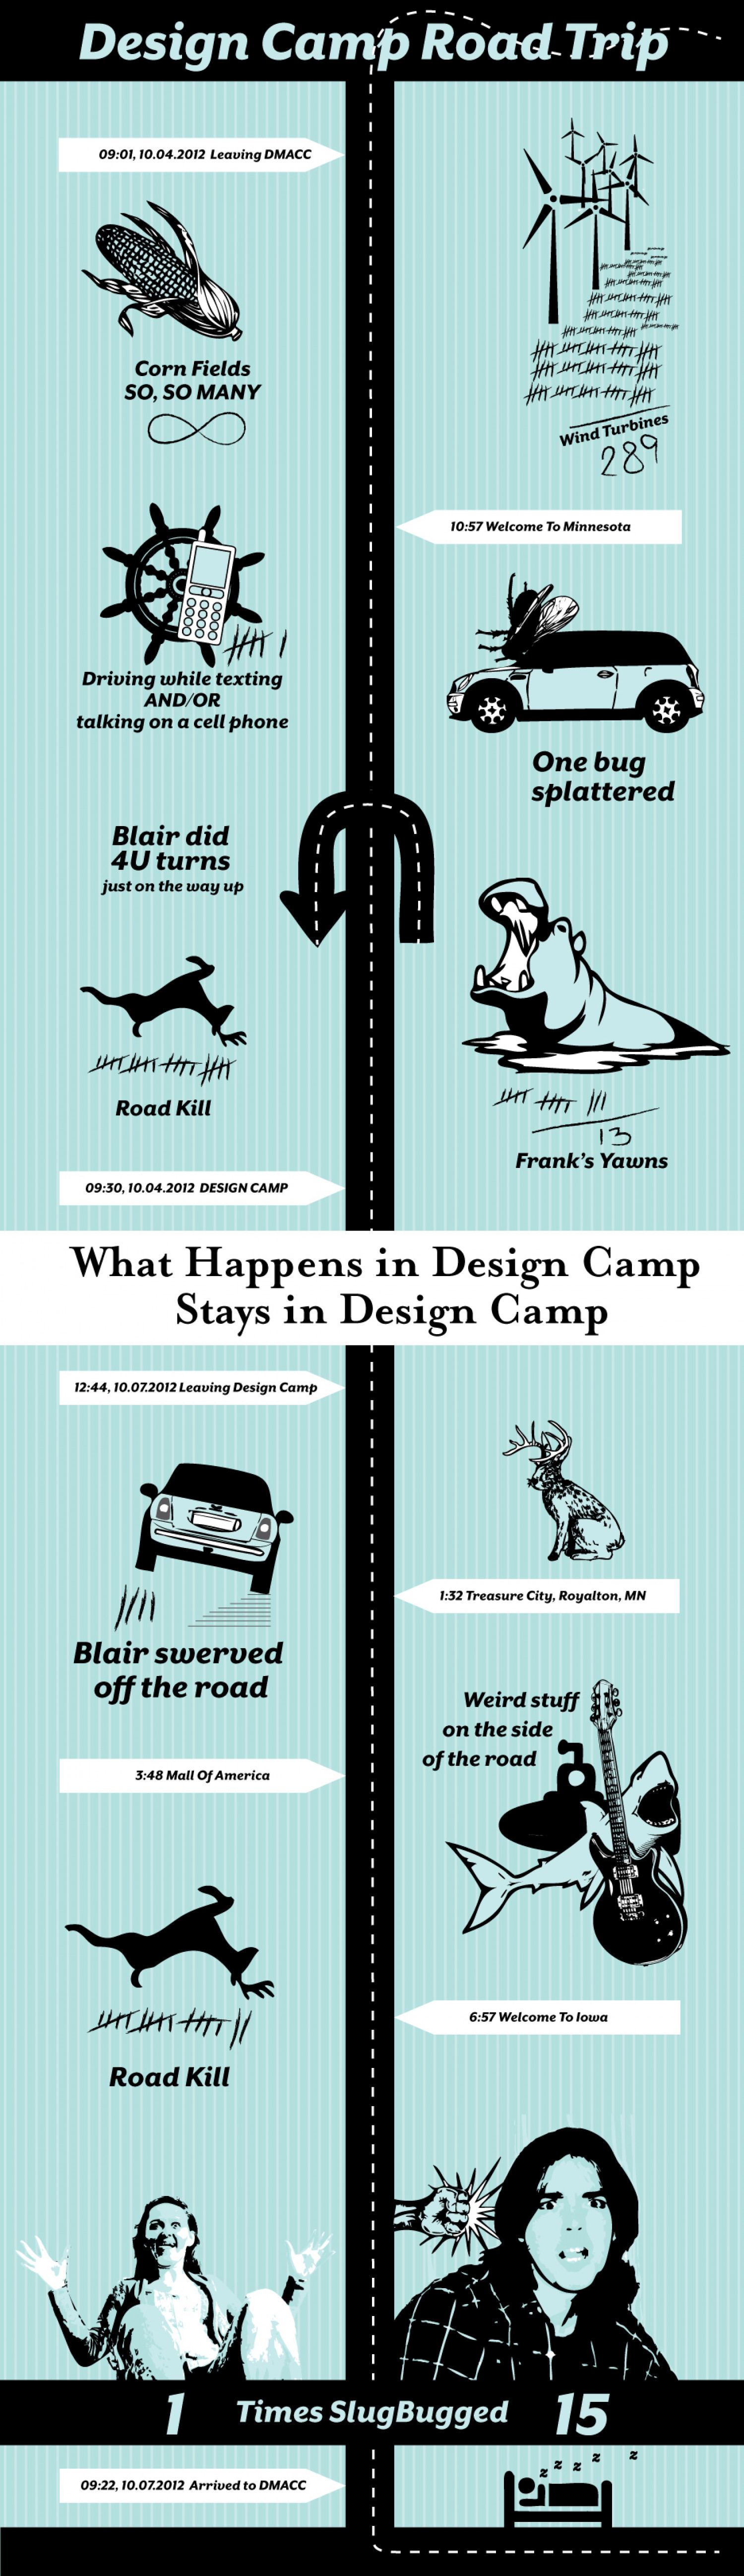 Design Camp 2012 Road Trip Infographic